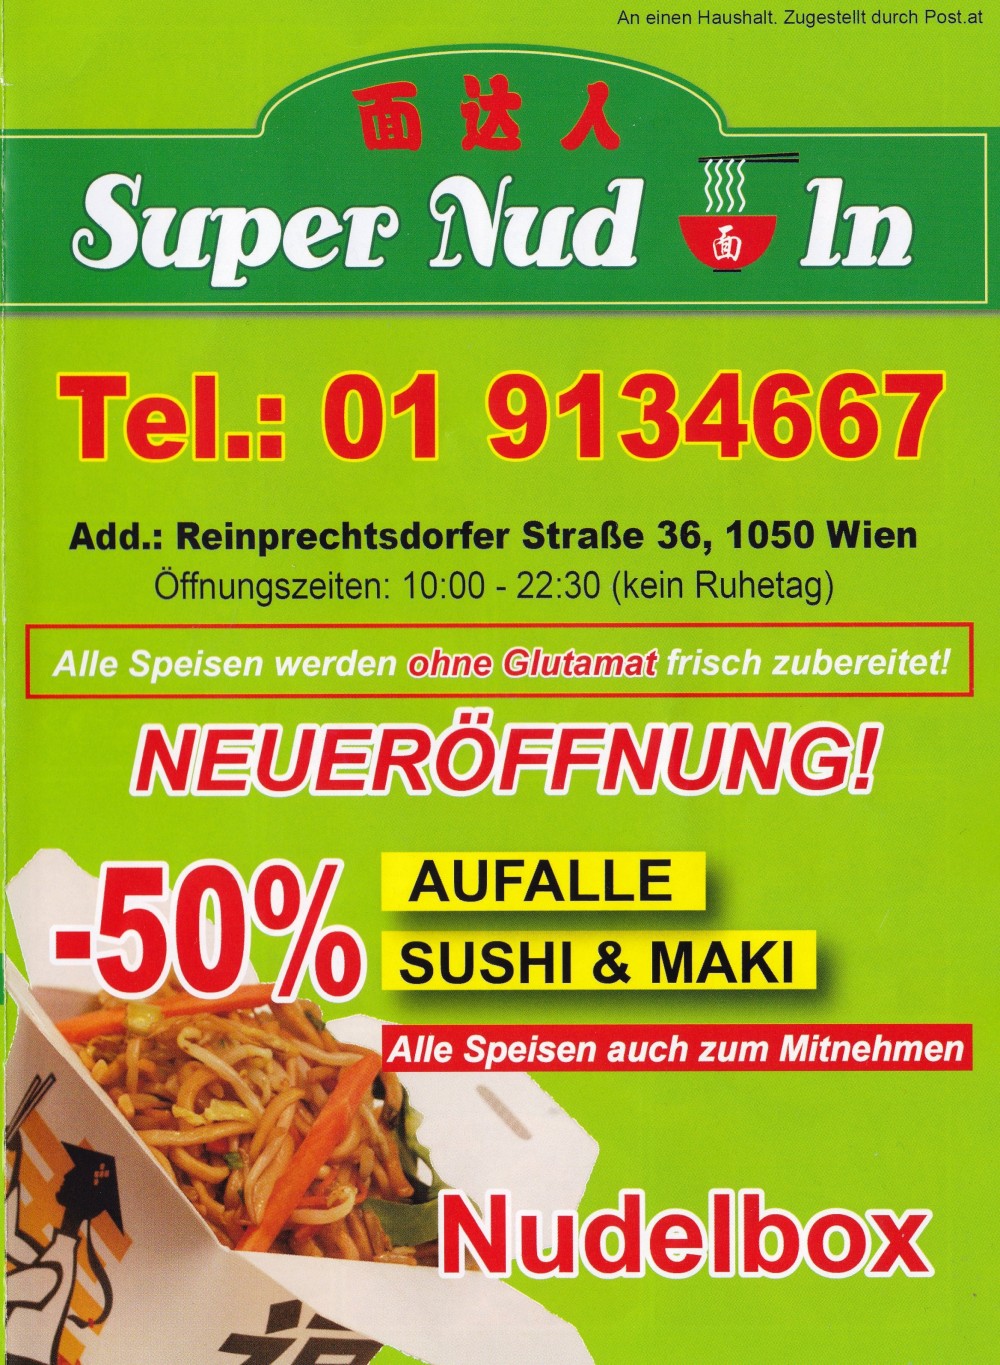 Asia-Restaurant Super Nudeln - Flyer-01 - Asia-Restaurant Super Nudeln - Wien